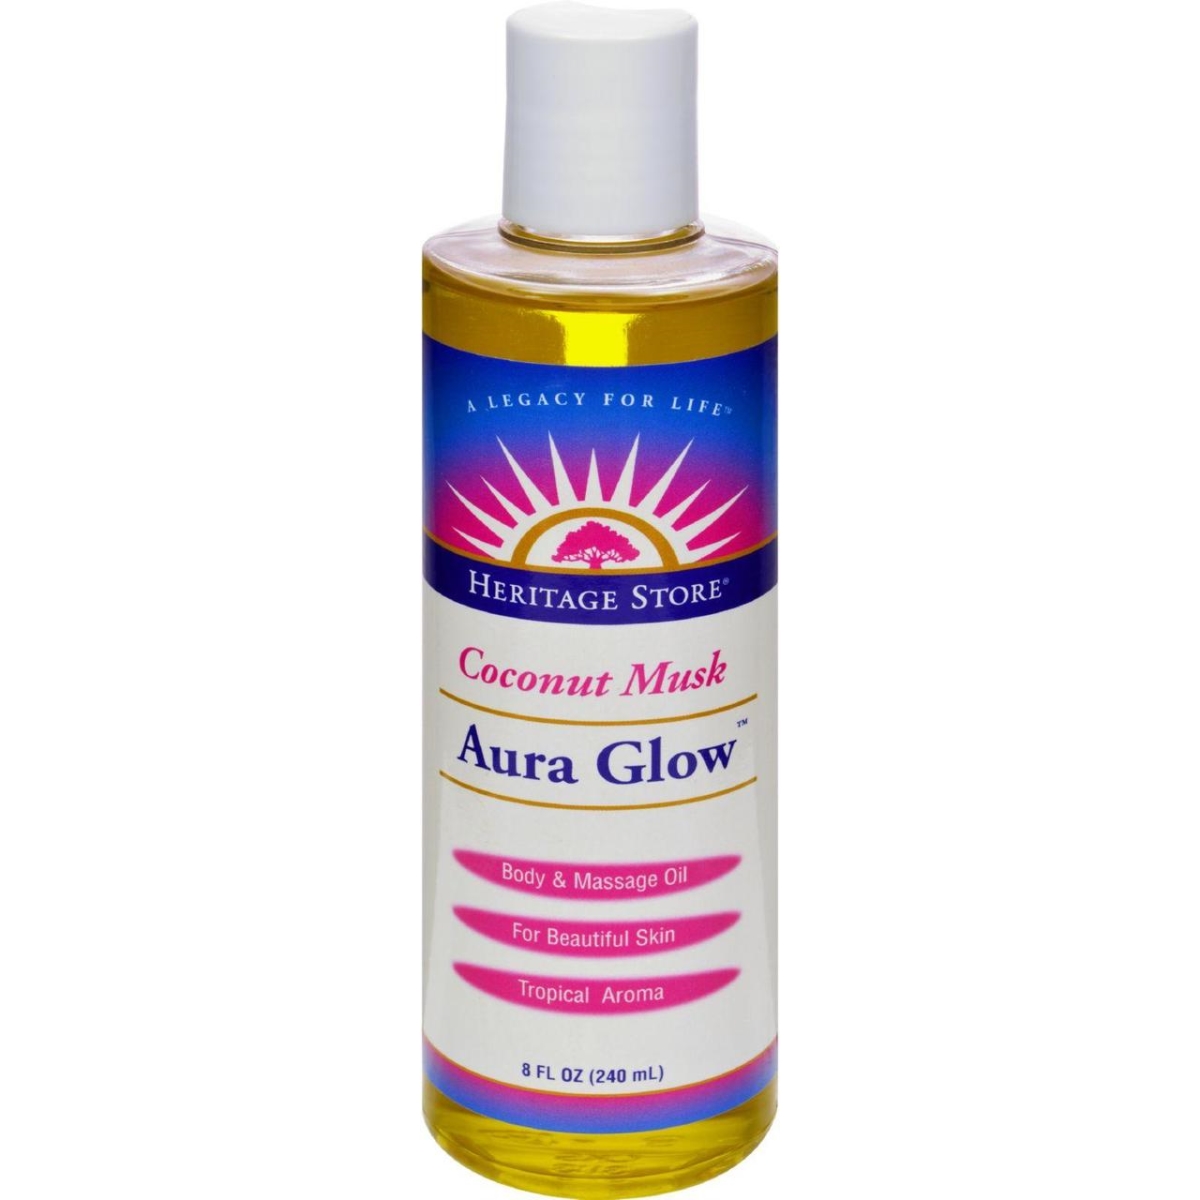 Hg1157189 8 Fl Oz Aura Glow Massage Lotion - Coconut